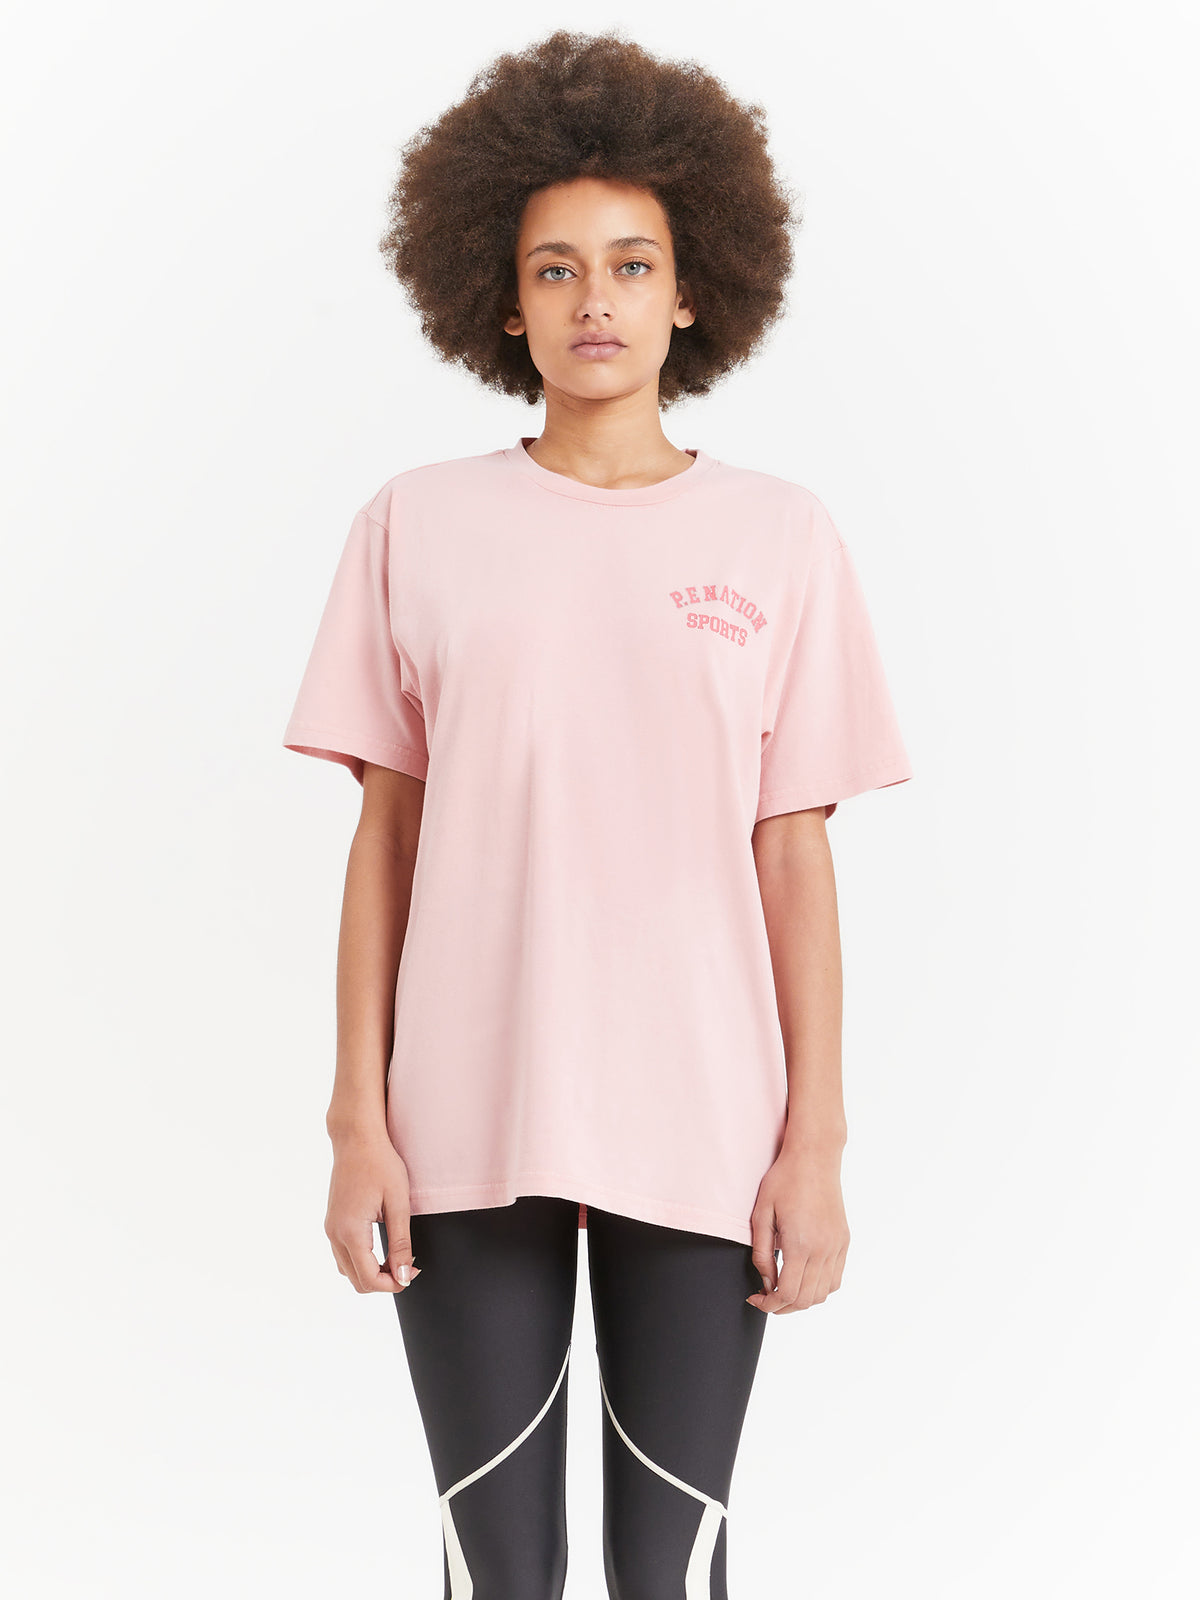 Barkley T-Shirt in Flamingo Pink